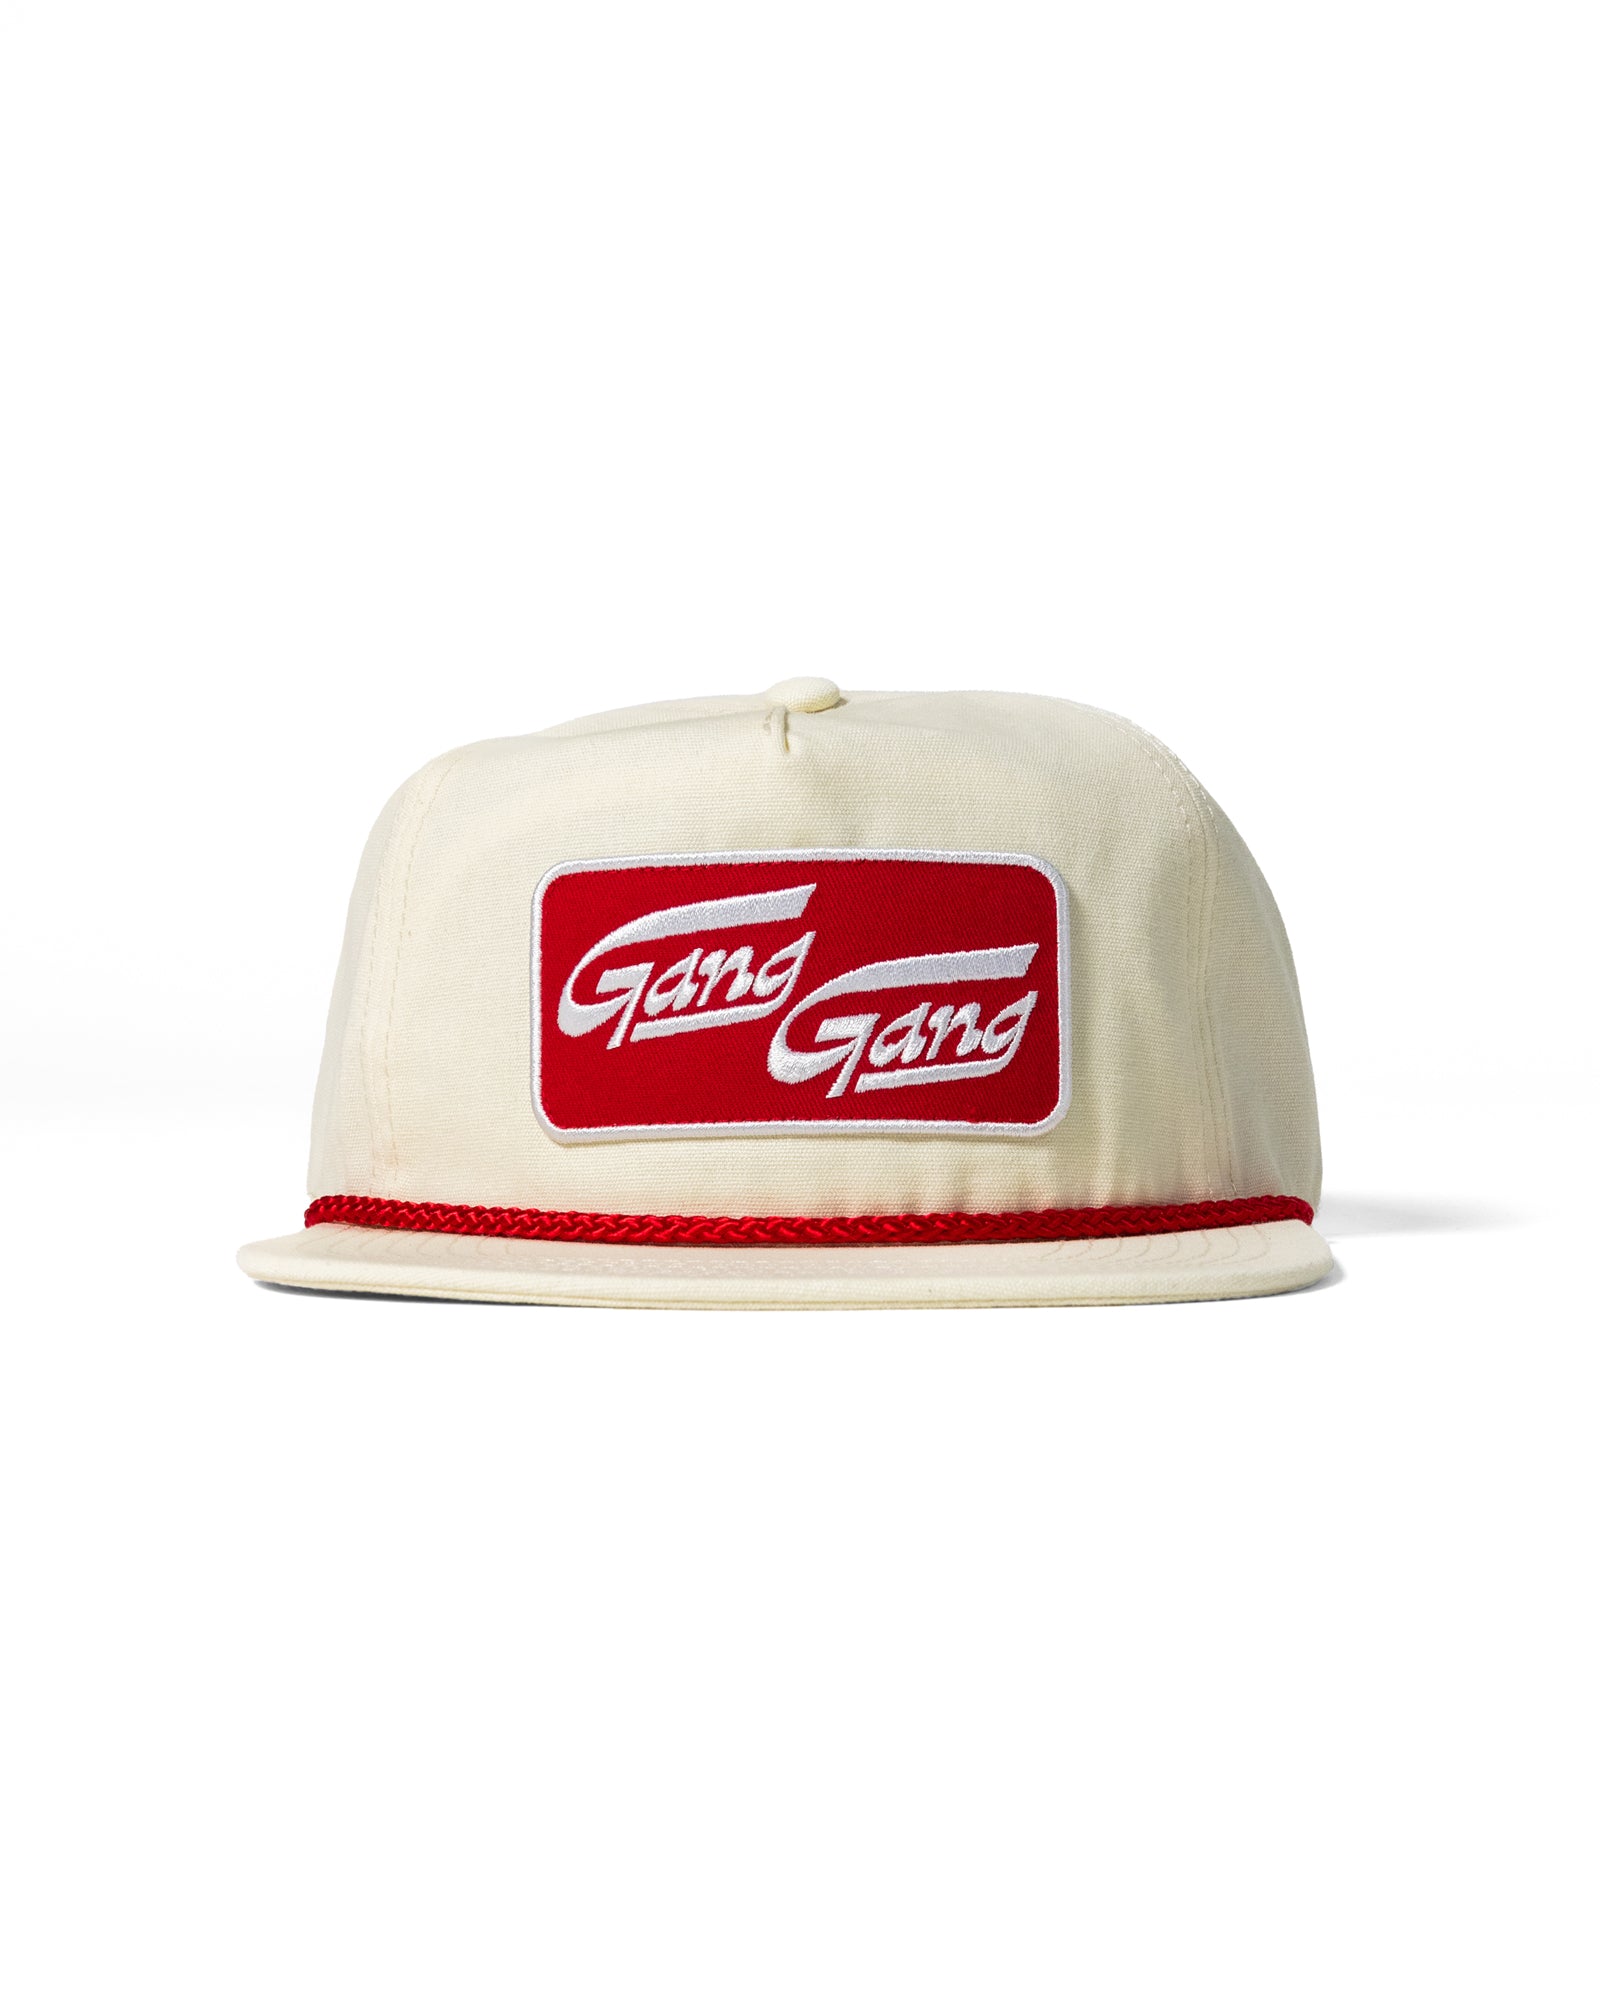 Gang Gang White/Red Hat